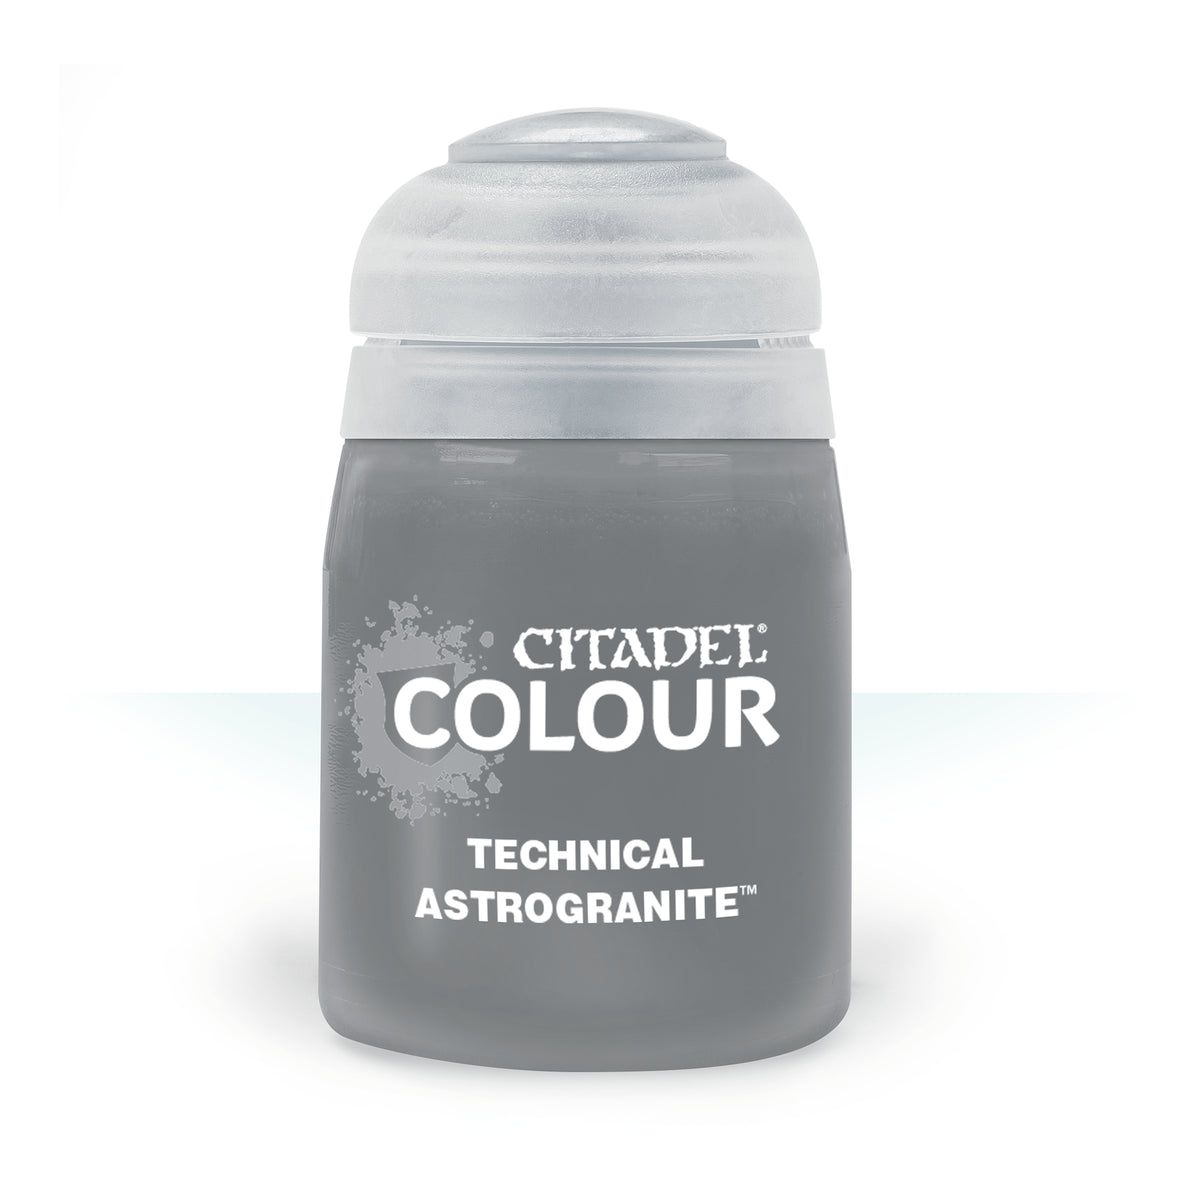 Astrogranite - Citadel Technical